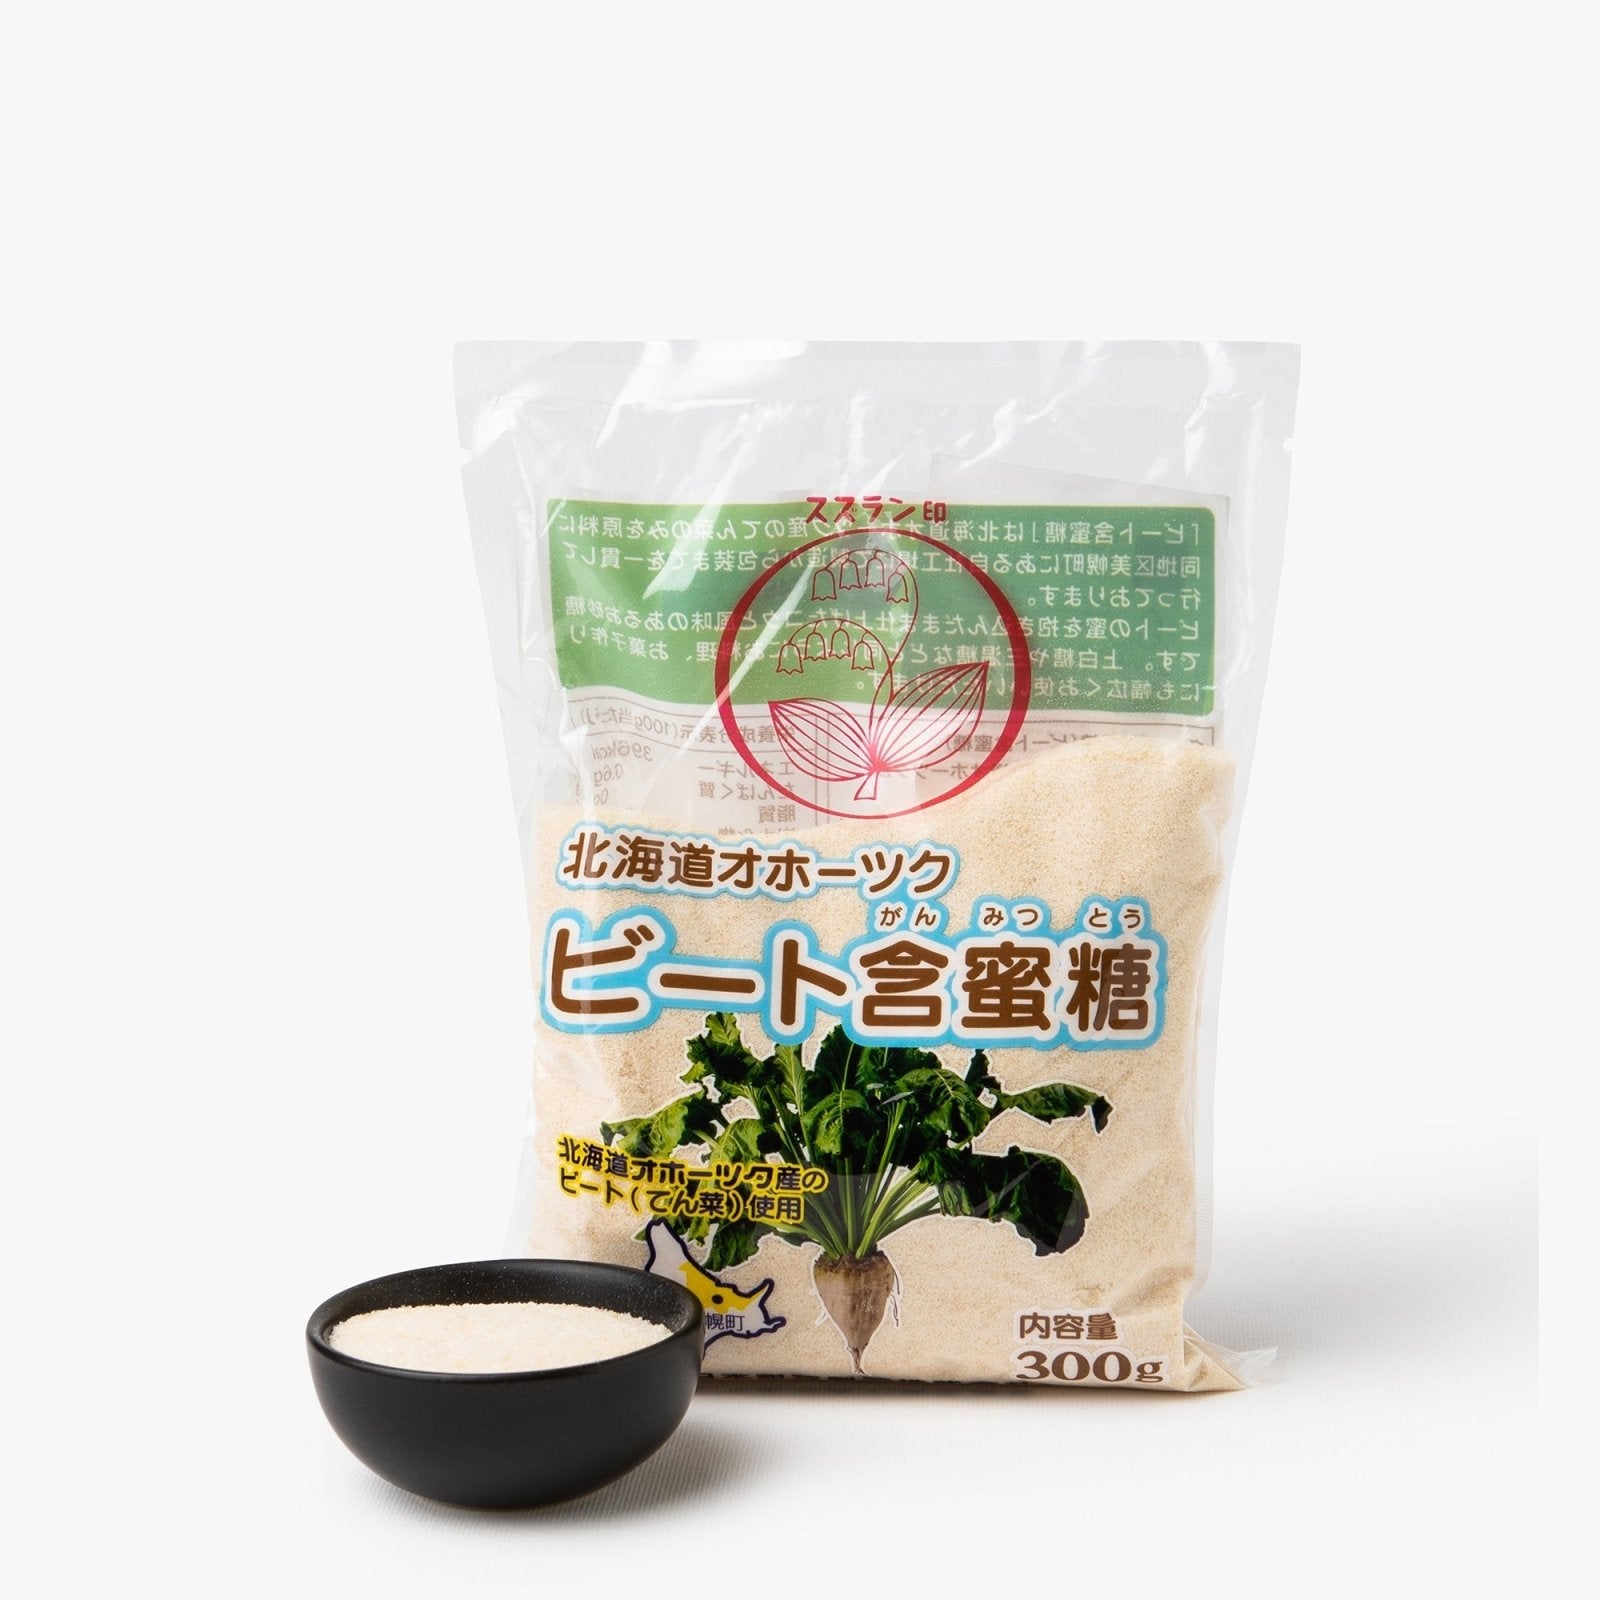 Sucre de betterave de hokkaido - 300g - Nippon Beet Sugar - iRASSHAi